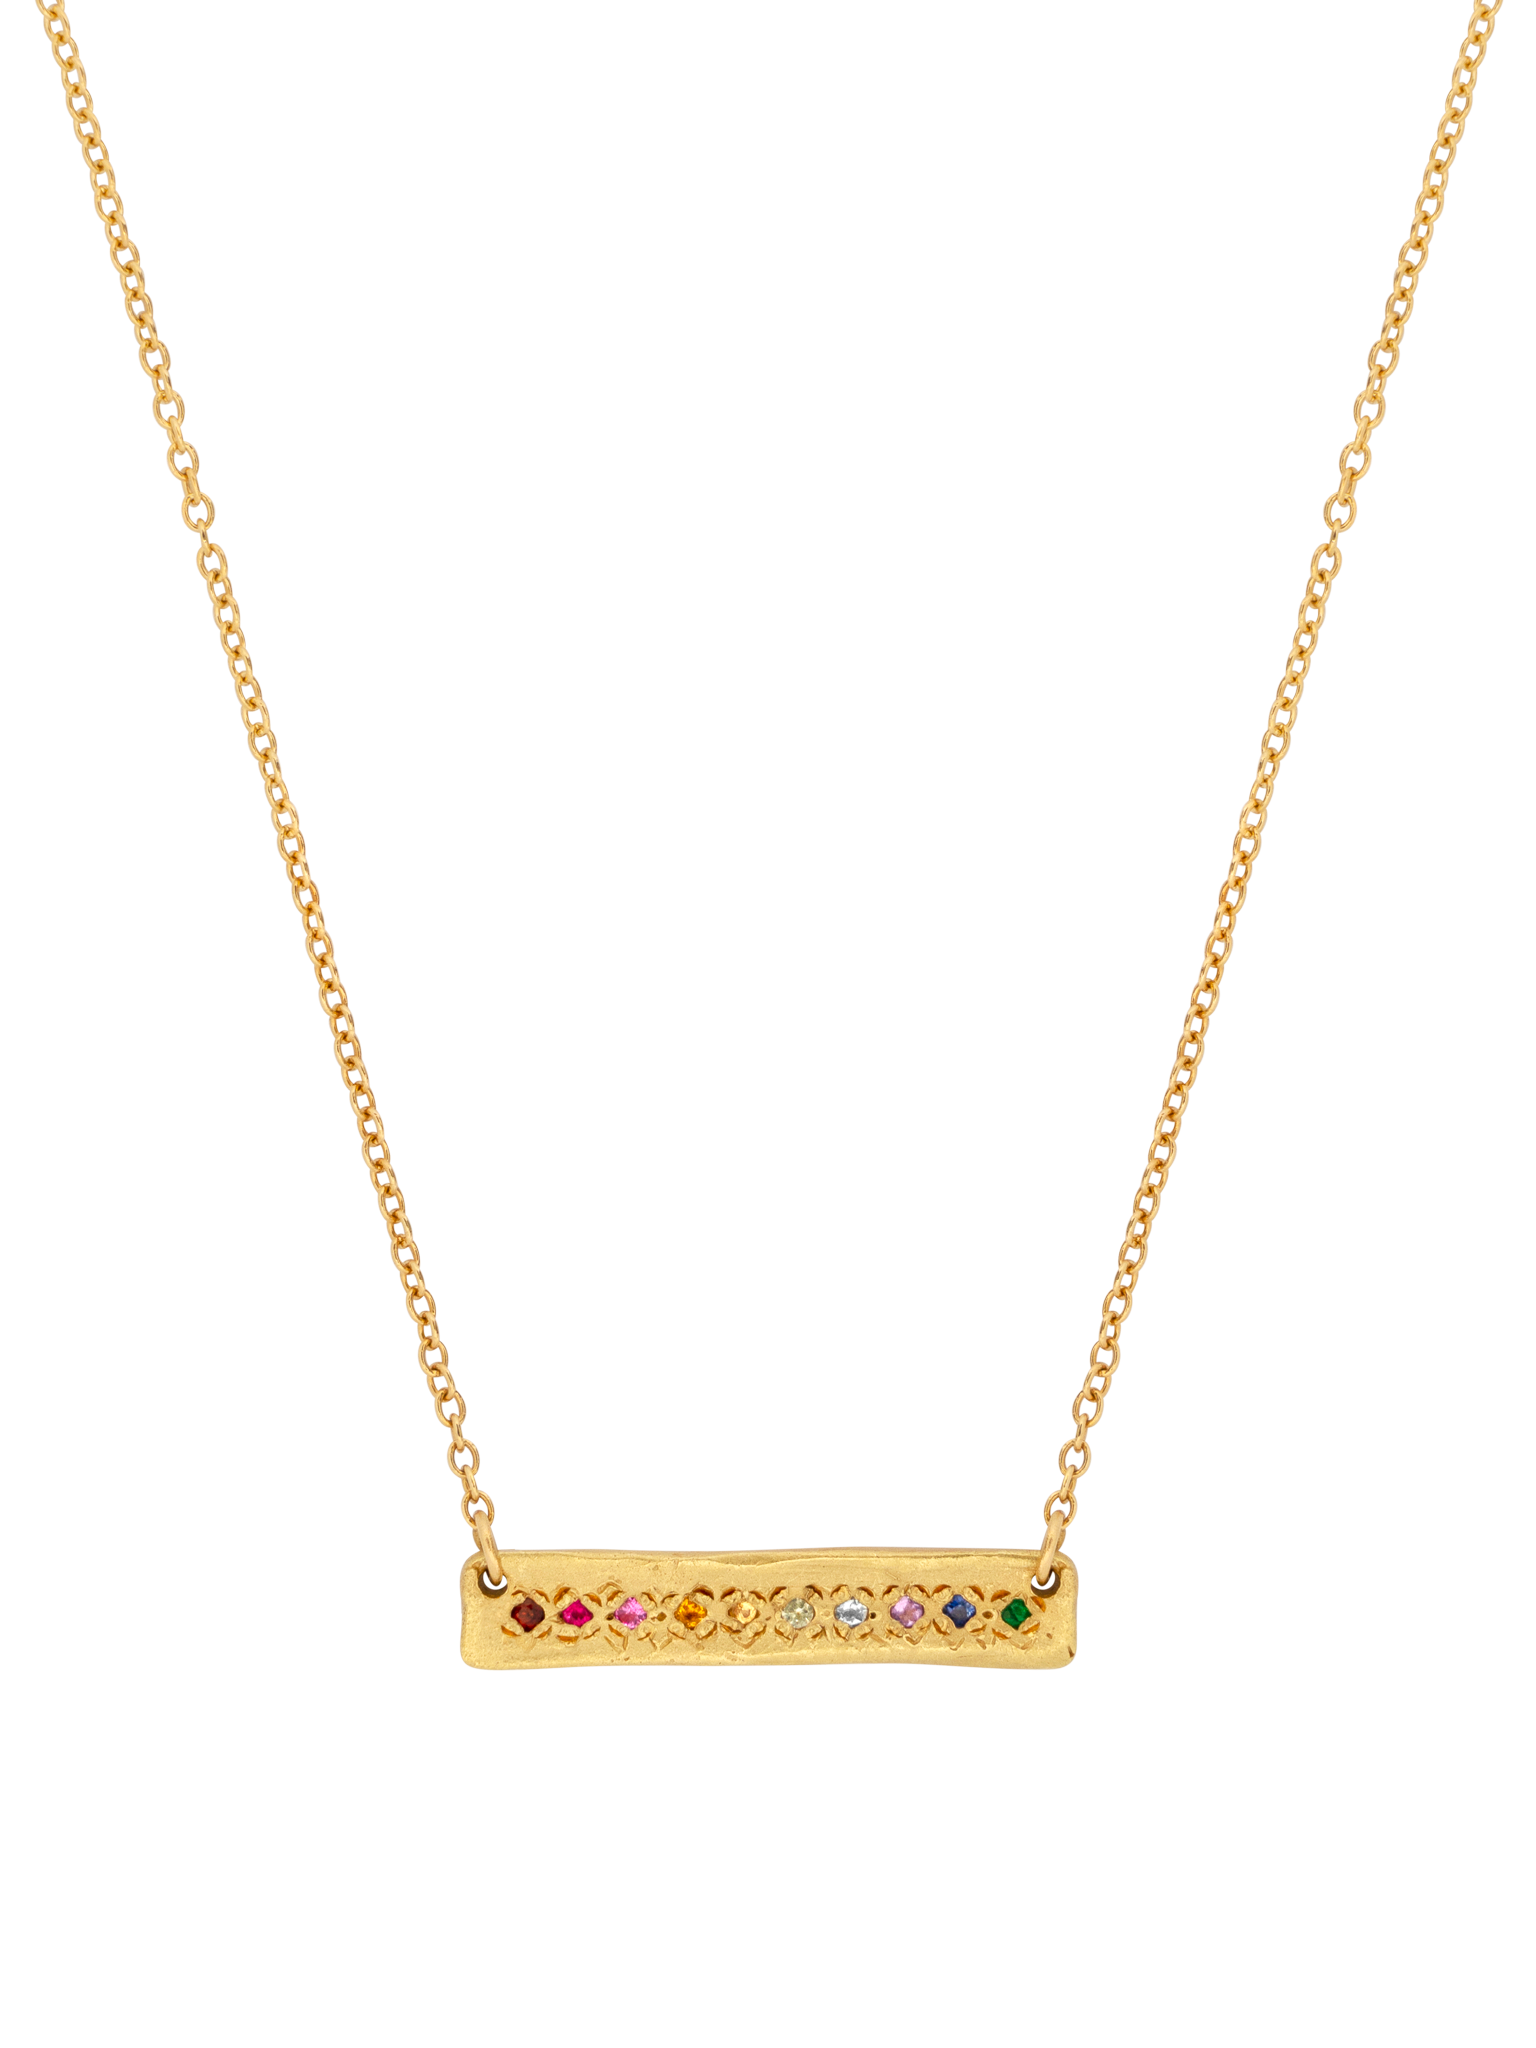 La fortuna rainbow bar necklace